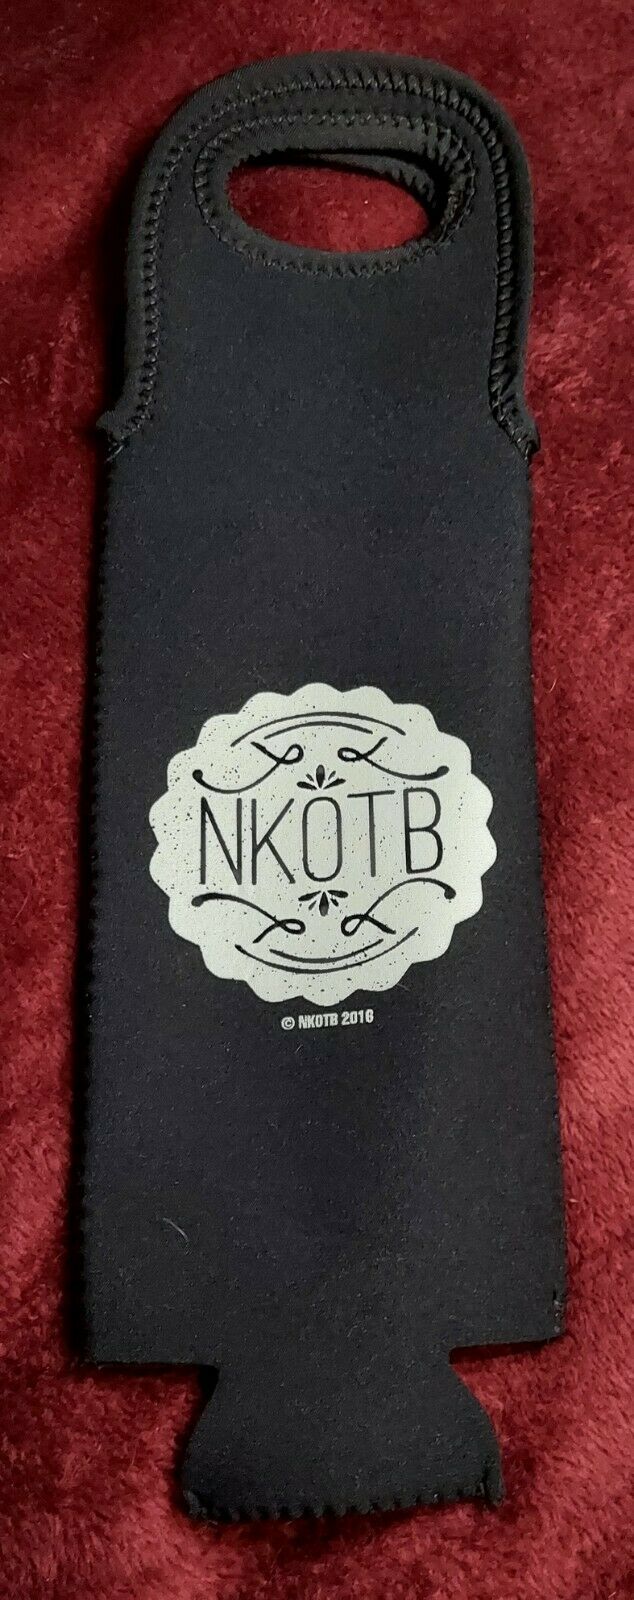 New Kids on the Block NKOTB 2016 Tour Insulated Wine Bottle Carrier